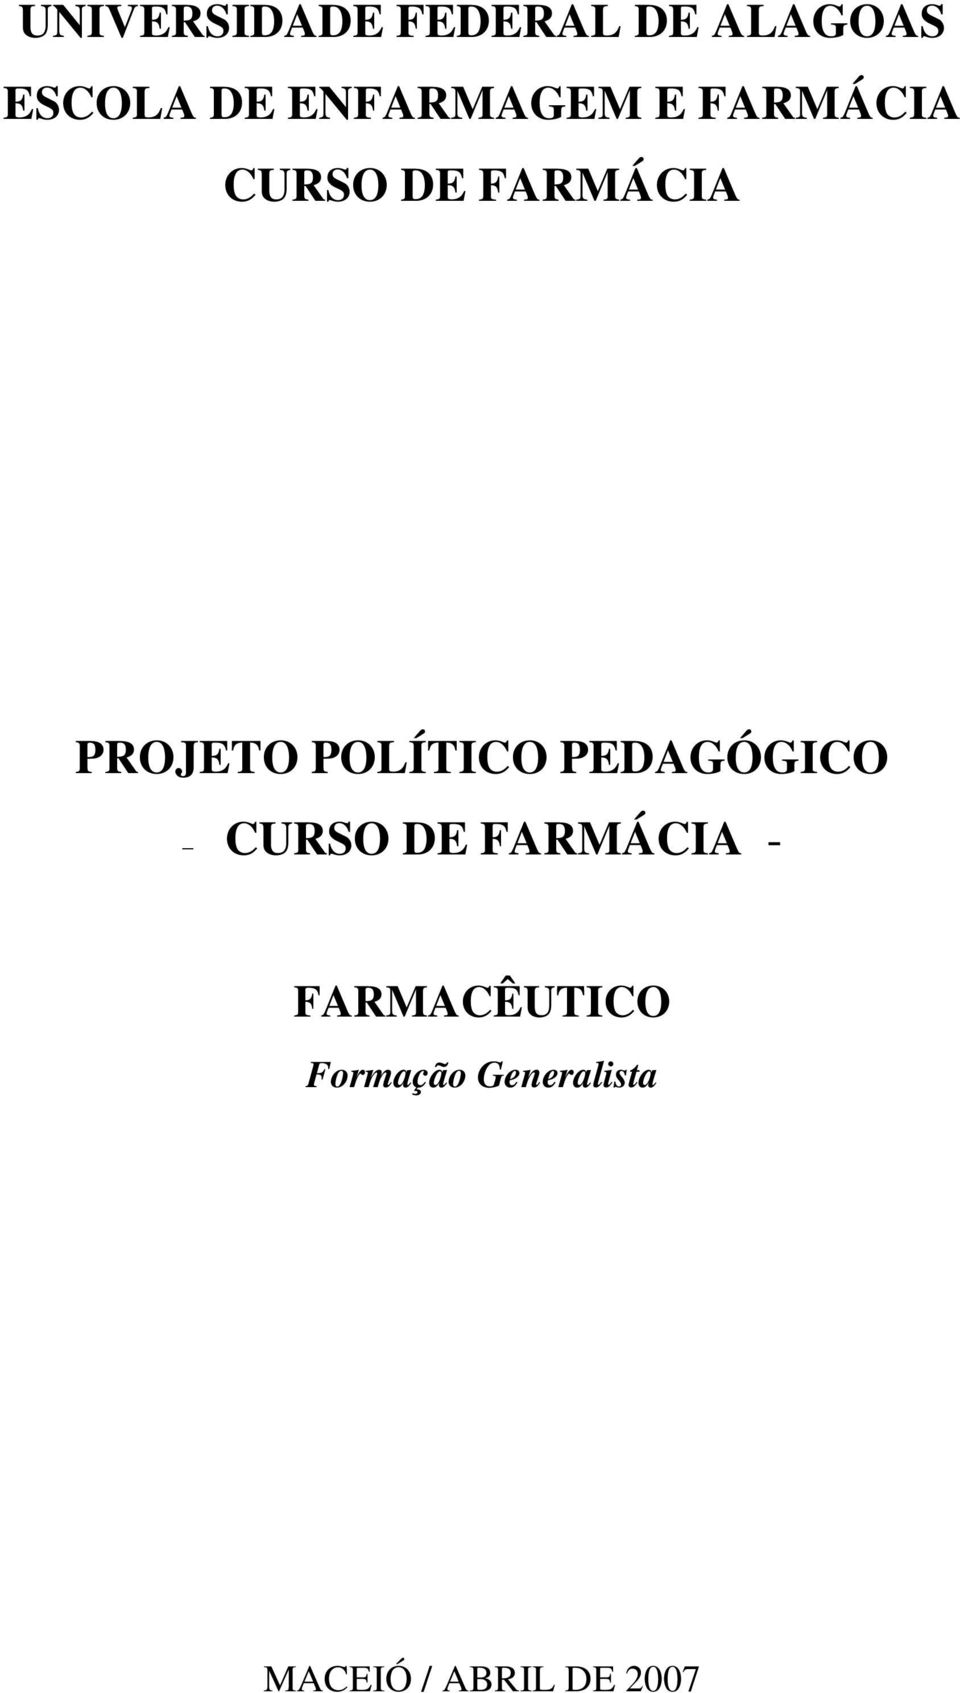 PROJETO POLÍTICO PEDAGÓGICO CURSO DE FARMÁCIA